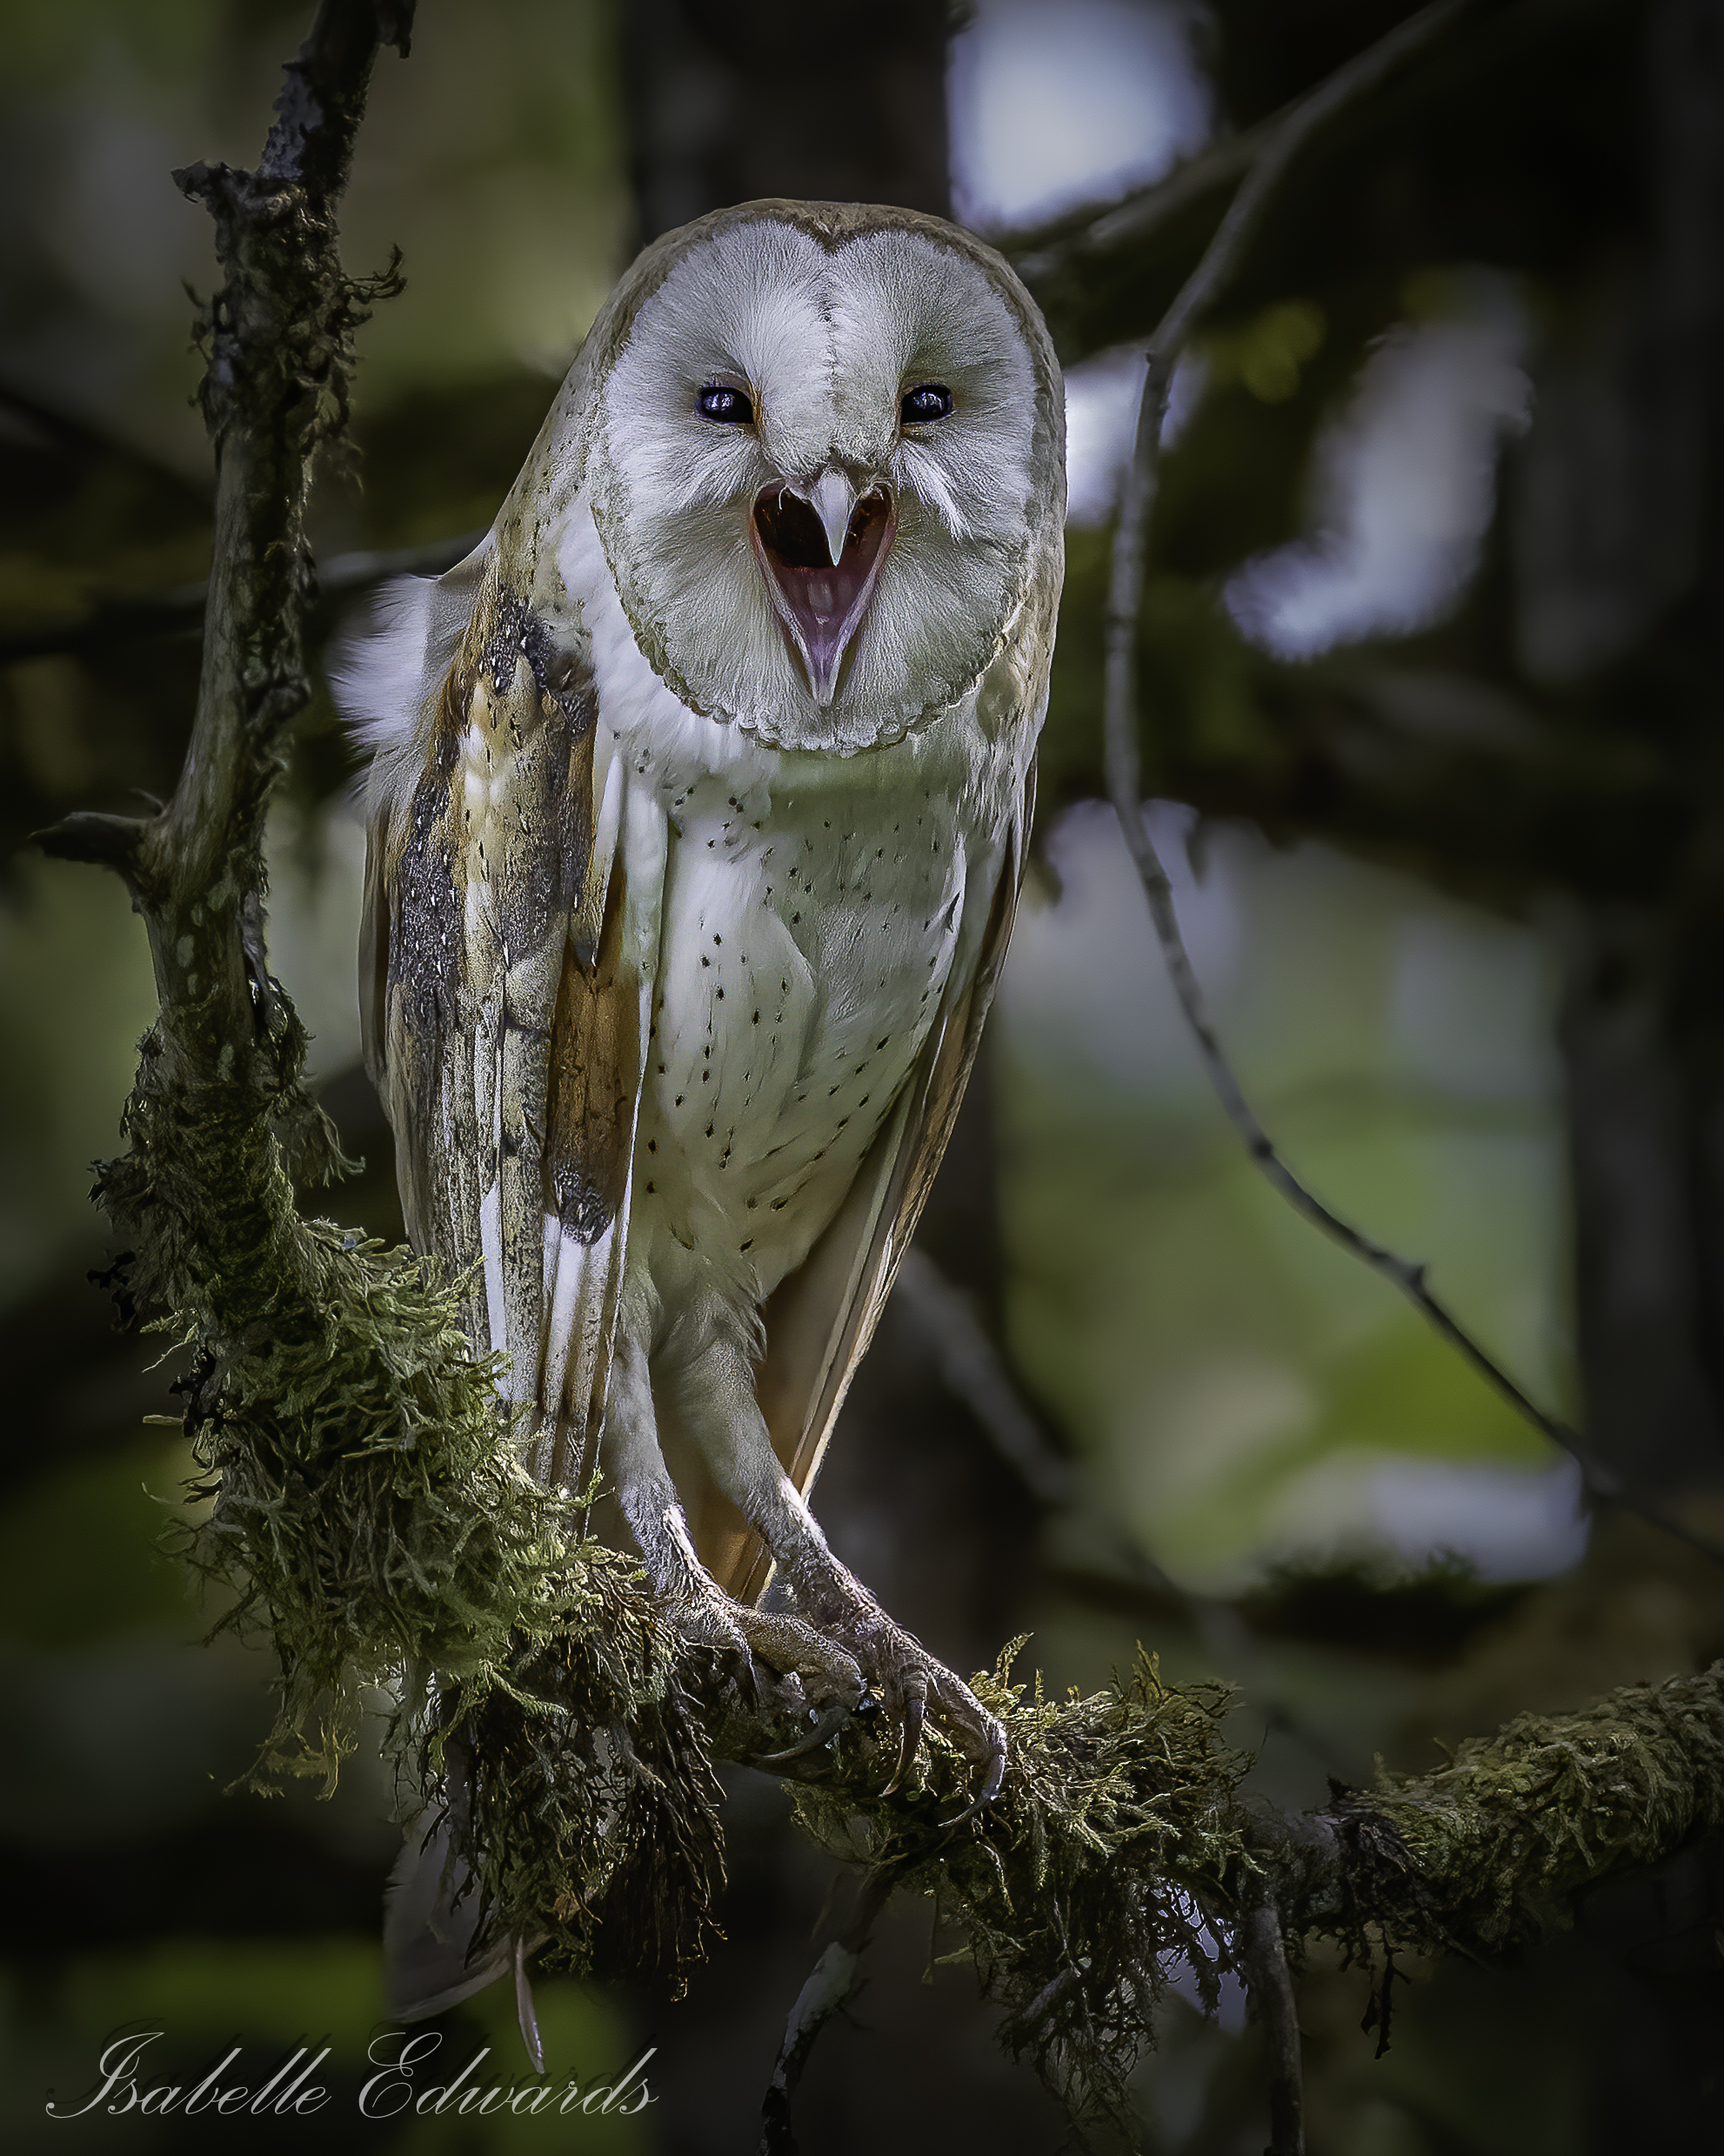 Wildlife Camera Captures the Secret Life of Barn Owls